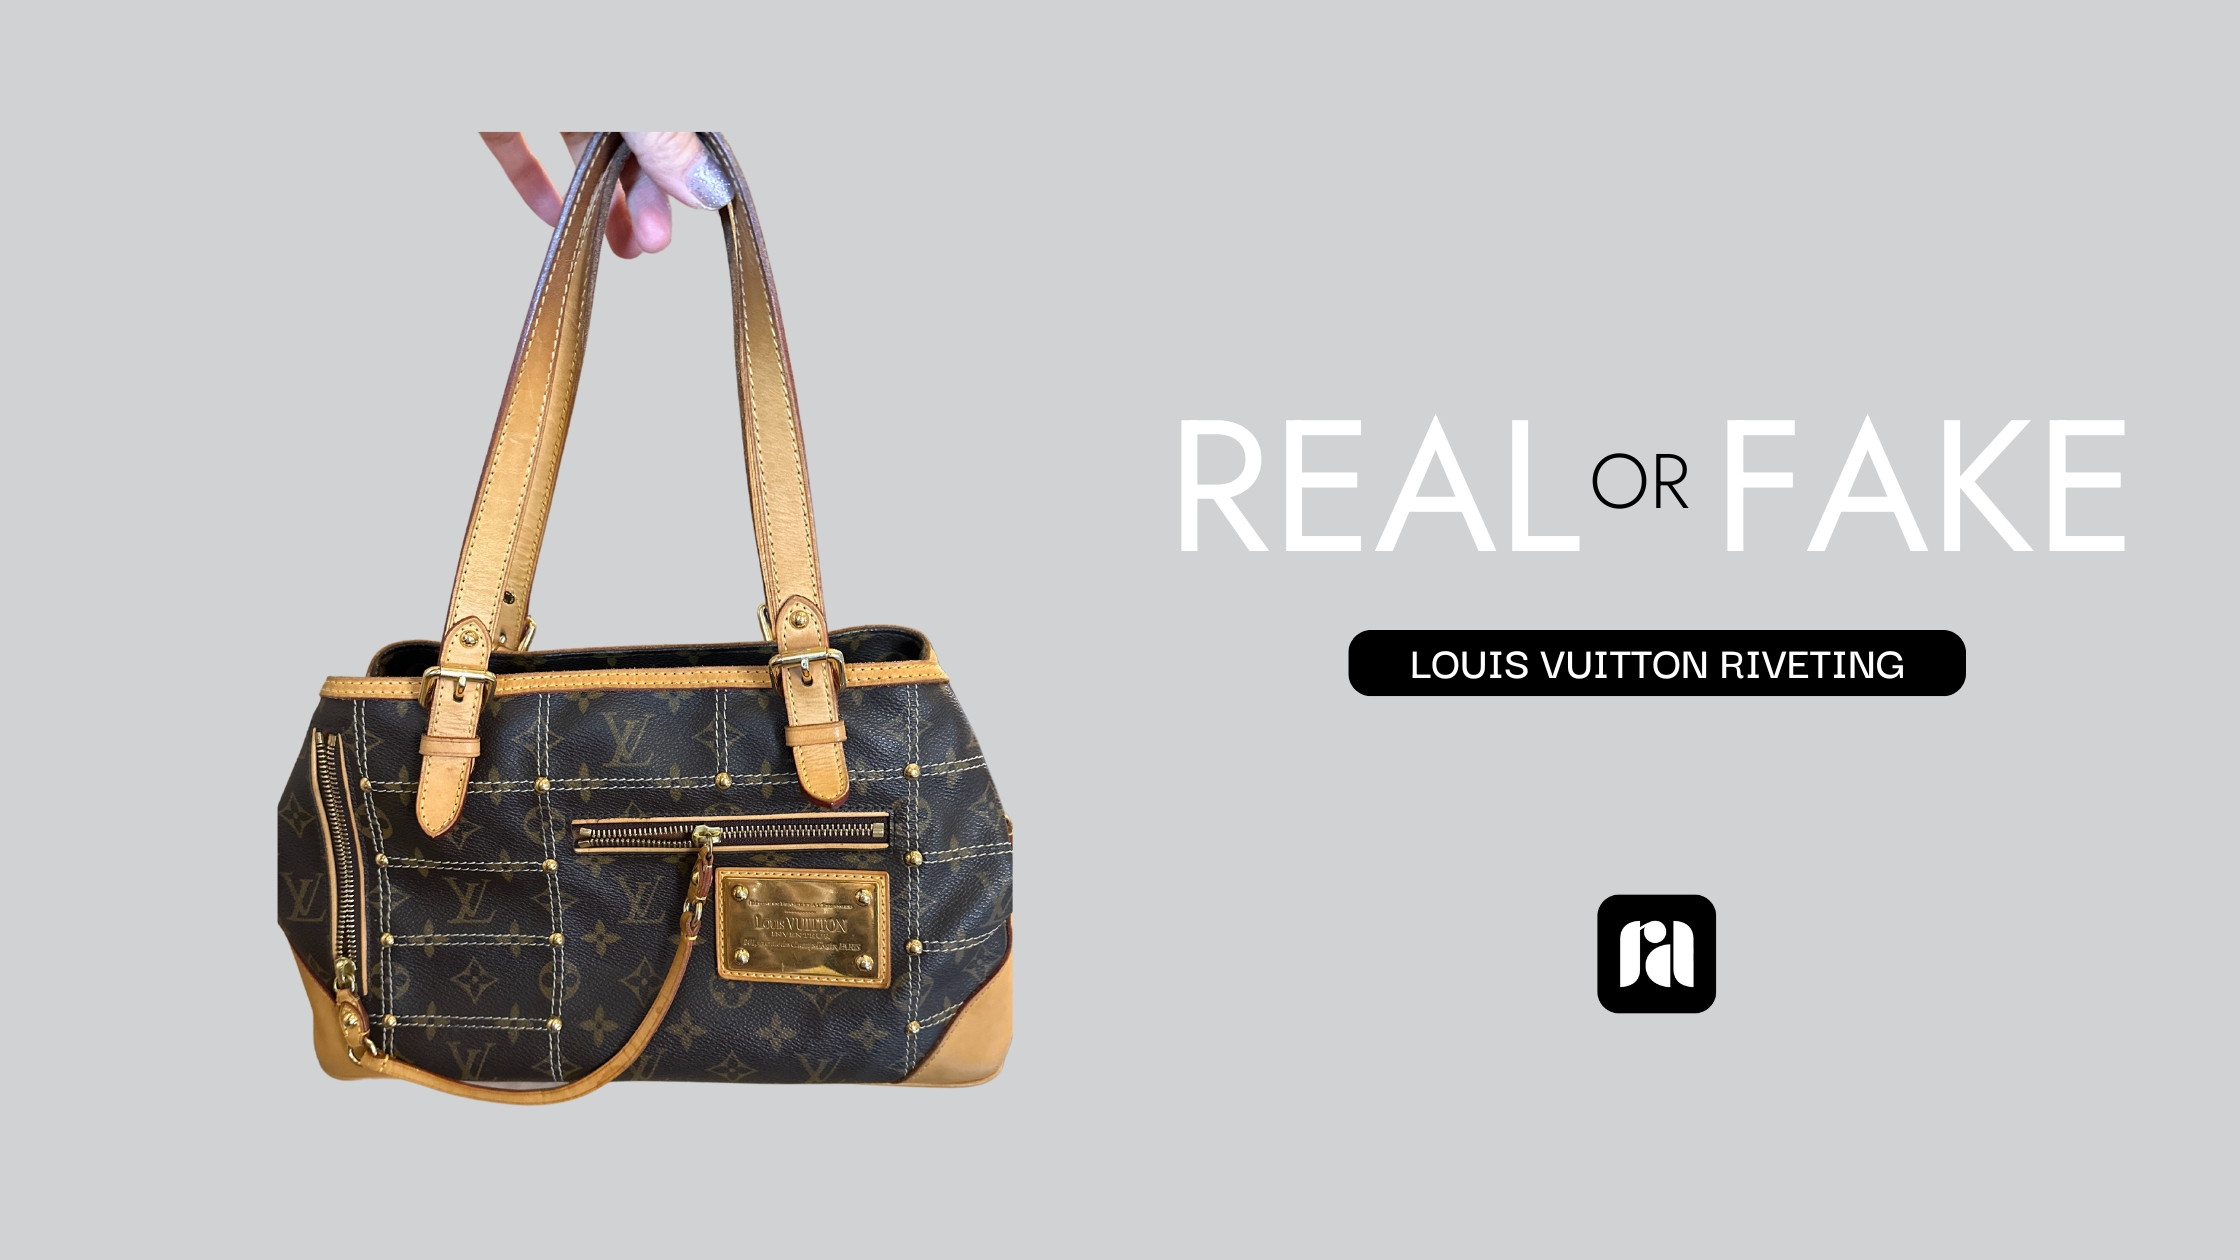 Real or Fake: Louis Vuitton Rivetting